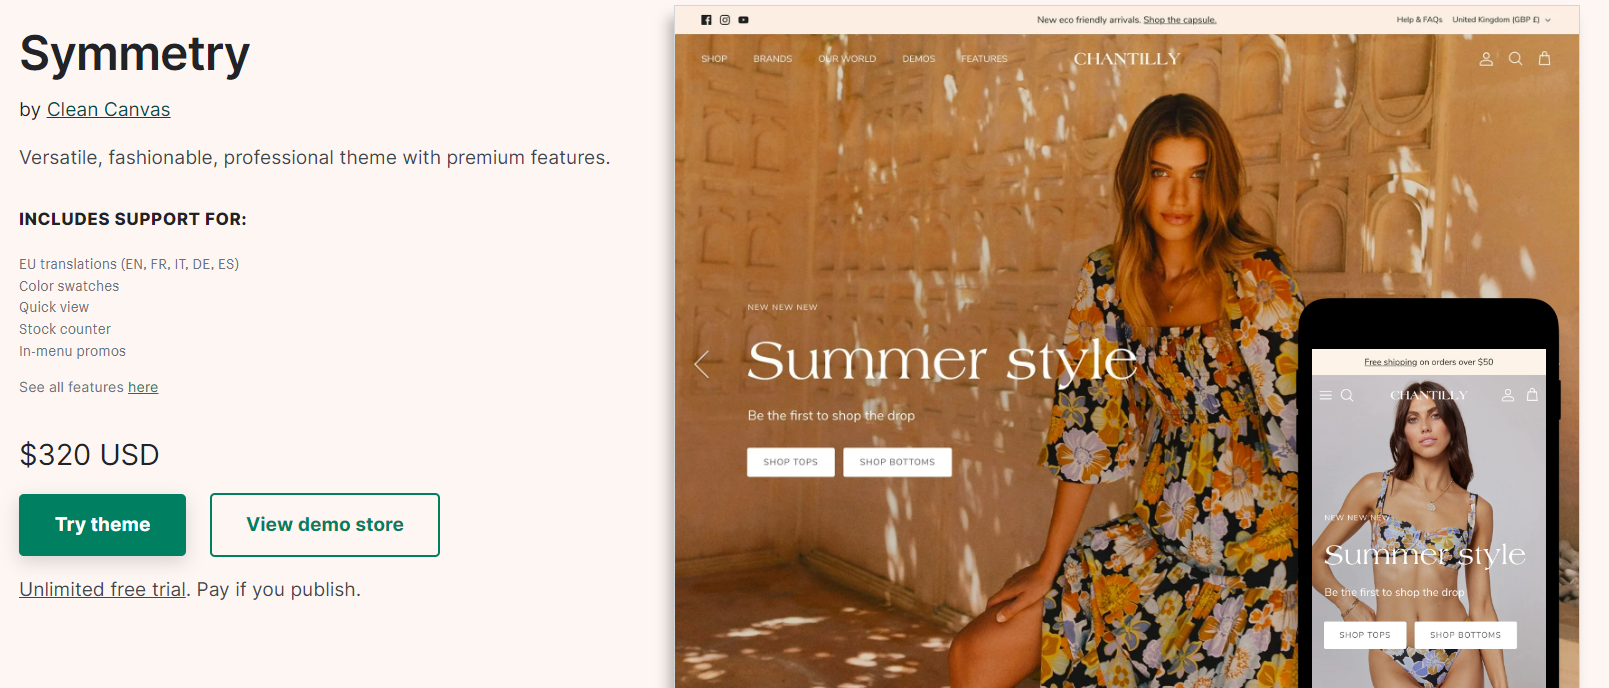 Shopify website design tips: Symmetry